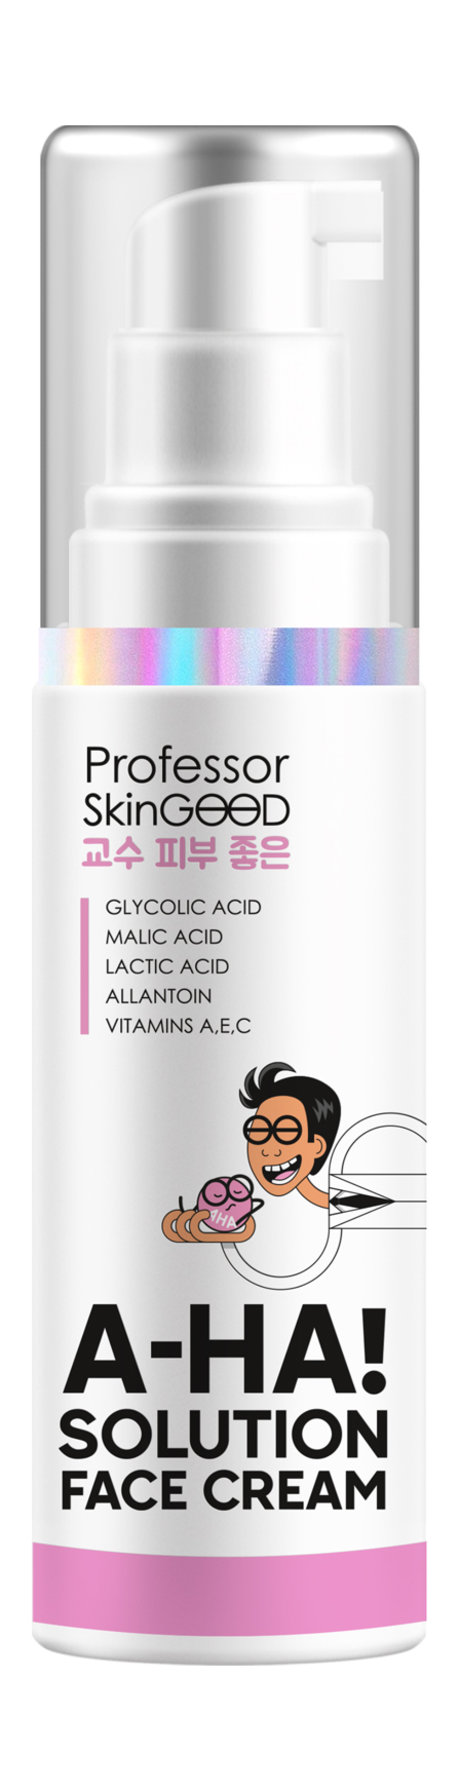 professor skingood a-ha! solution face cream